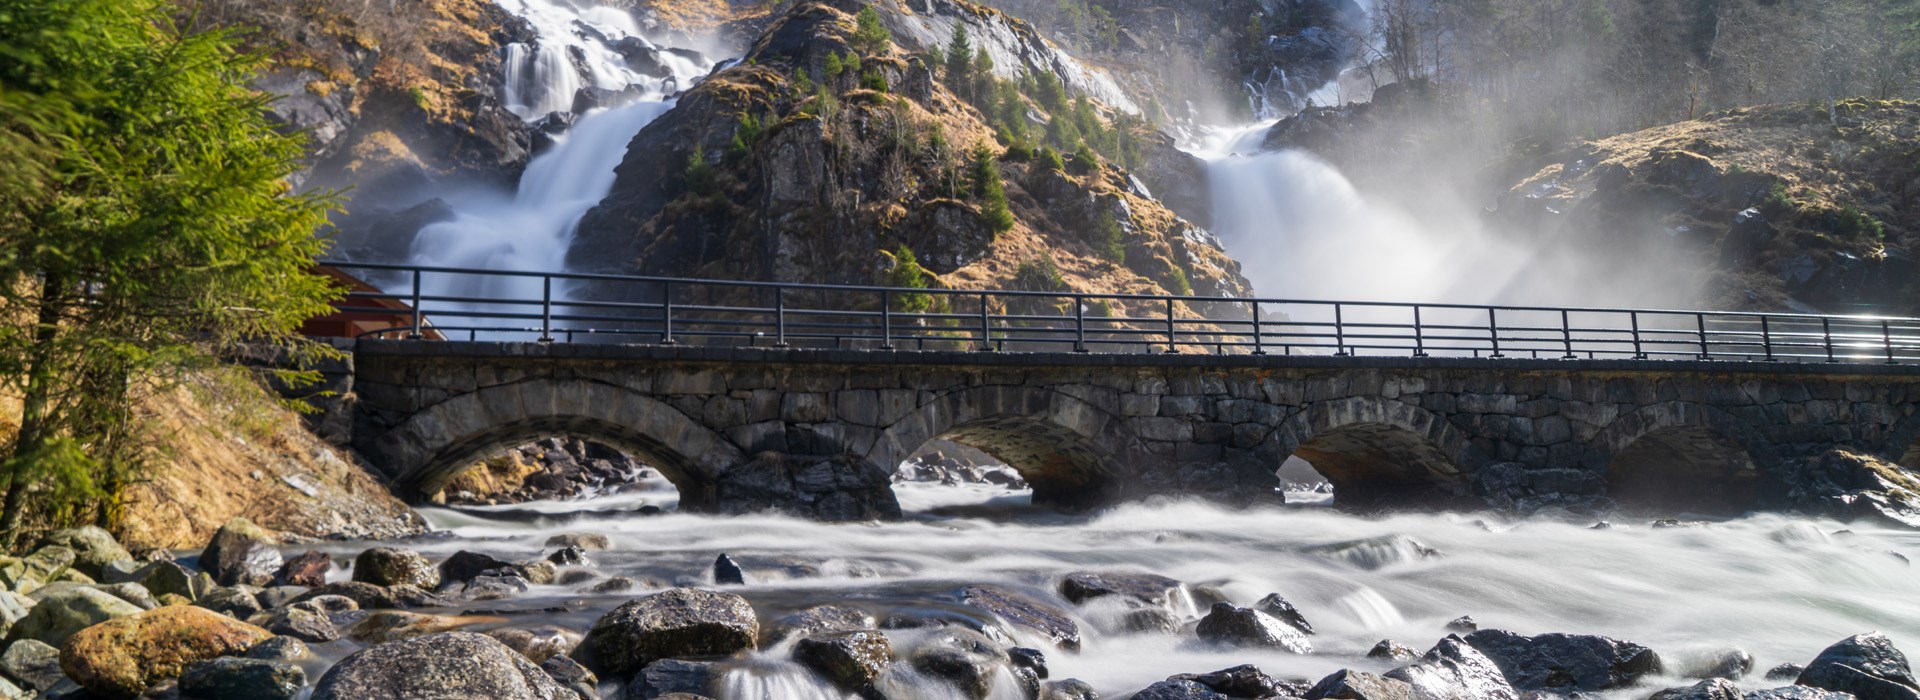 Visiter La cascade de Latefoss - Norvège